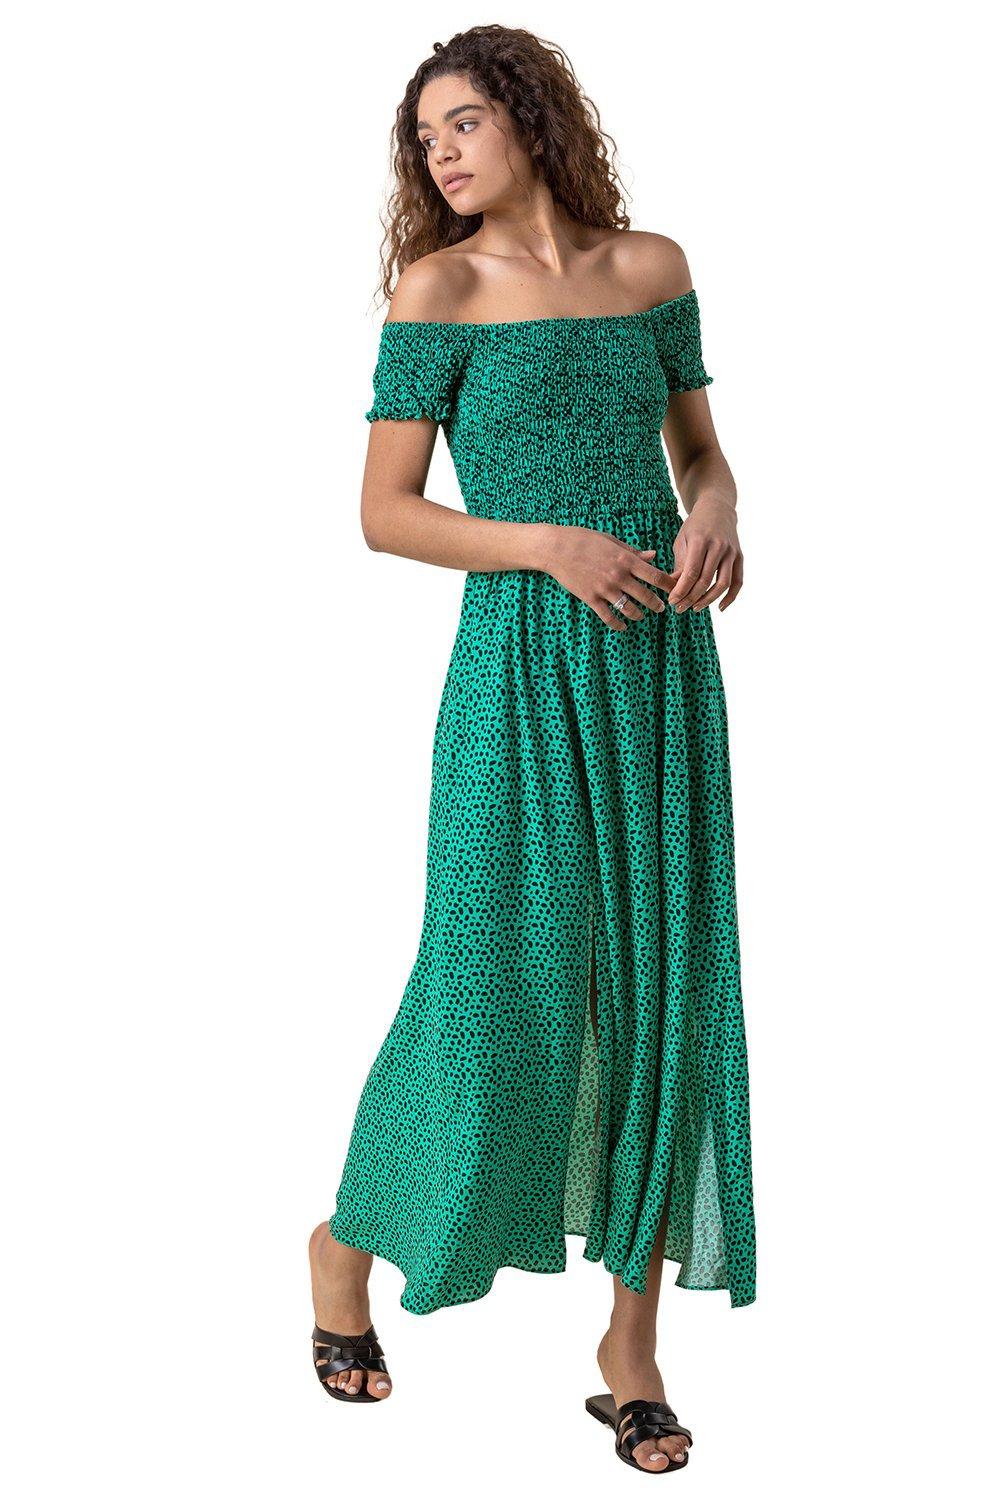 Dresses | Shirred Spot Print Bardot Dress | Roman